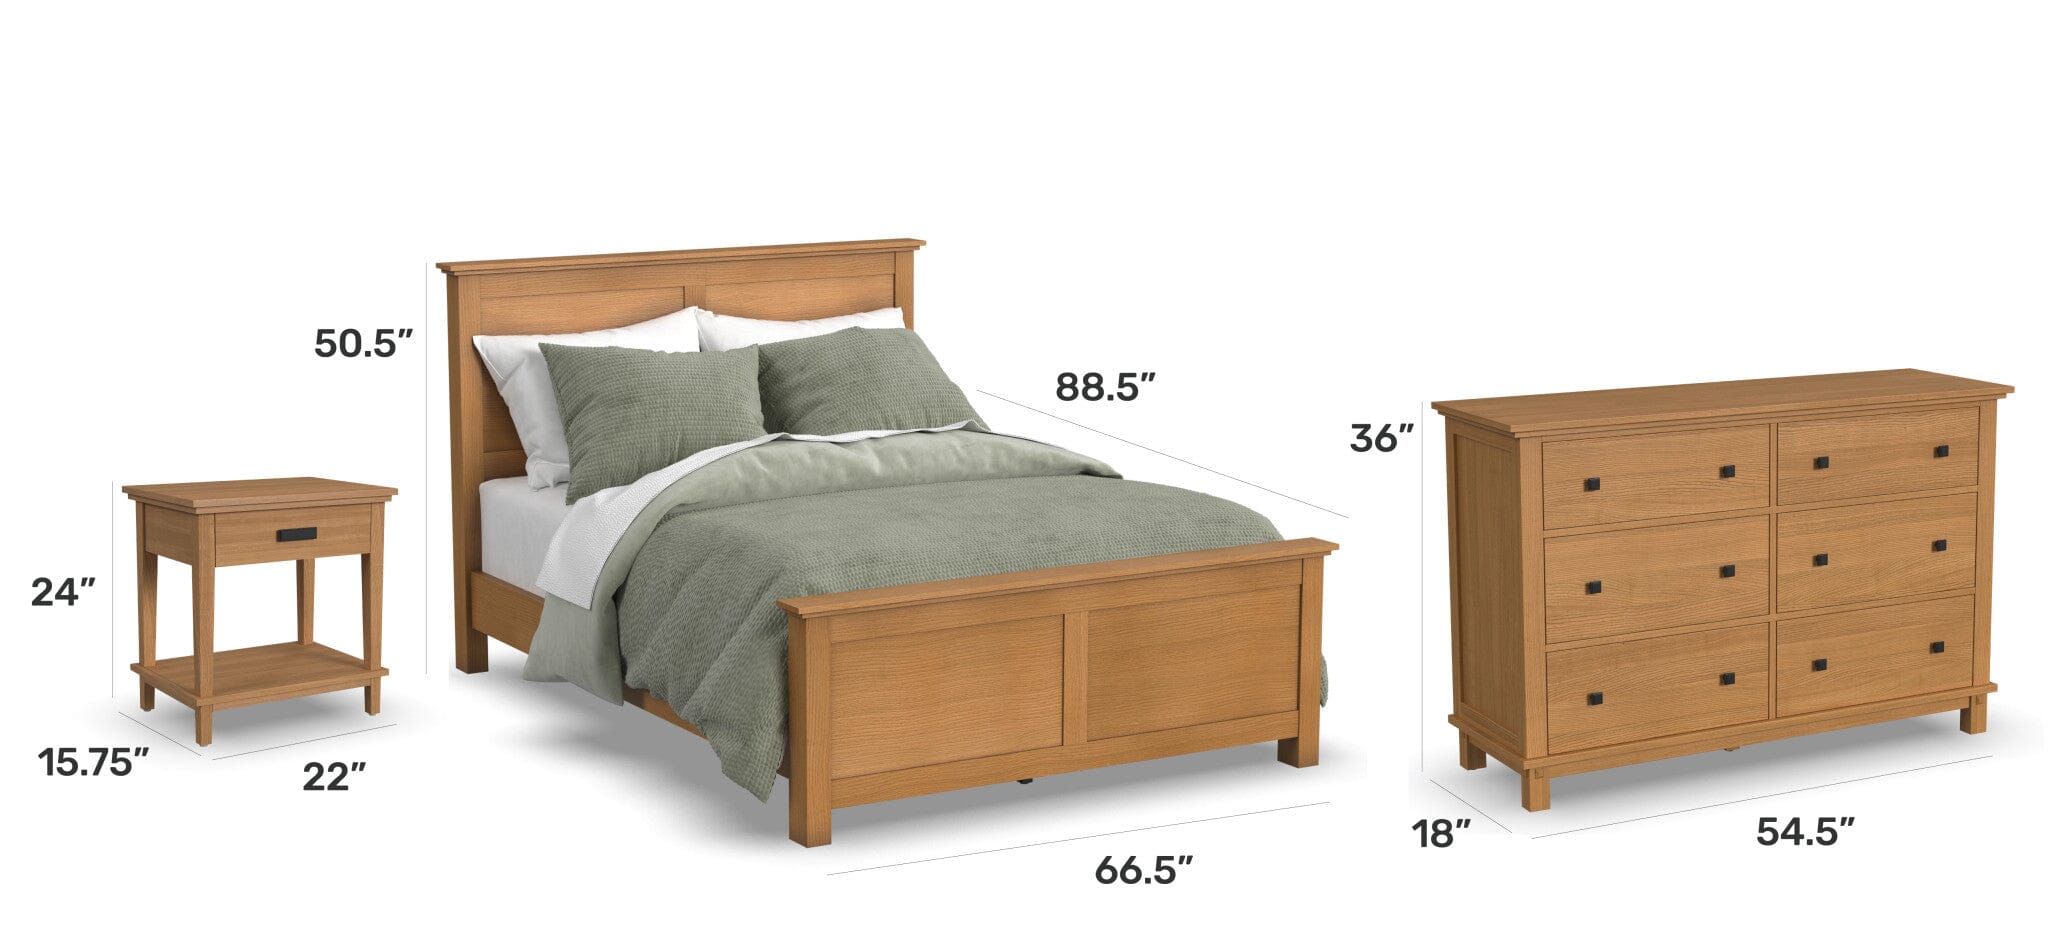 Traditional Queen Bed, Nightstand and Dresser By Oak Park Queen Bed Oak Park